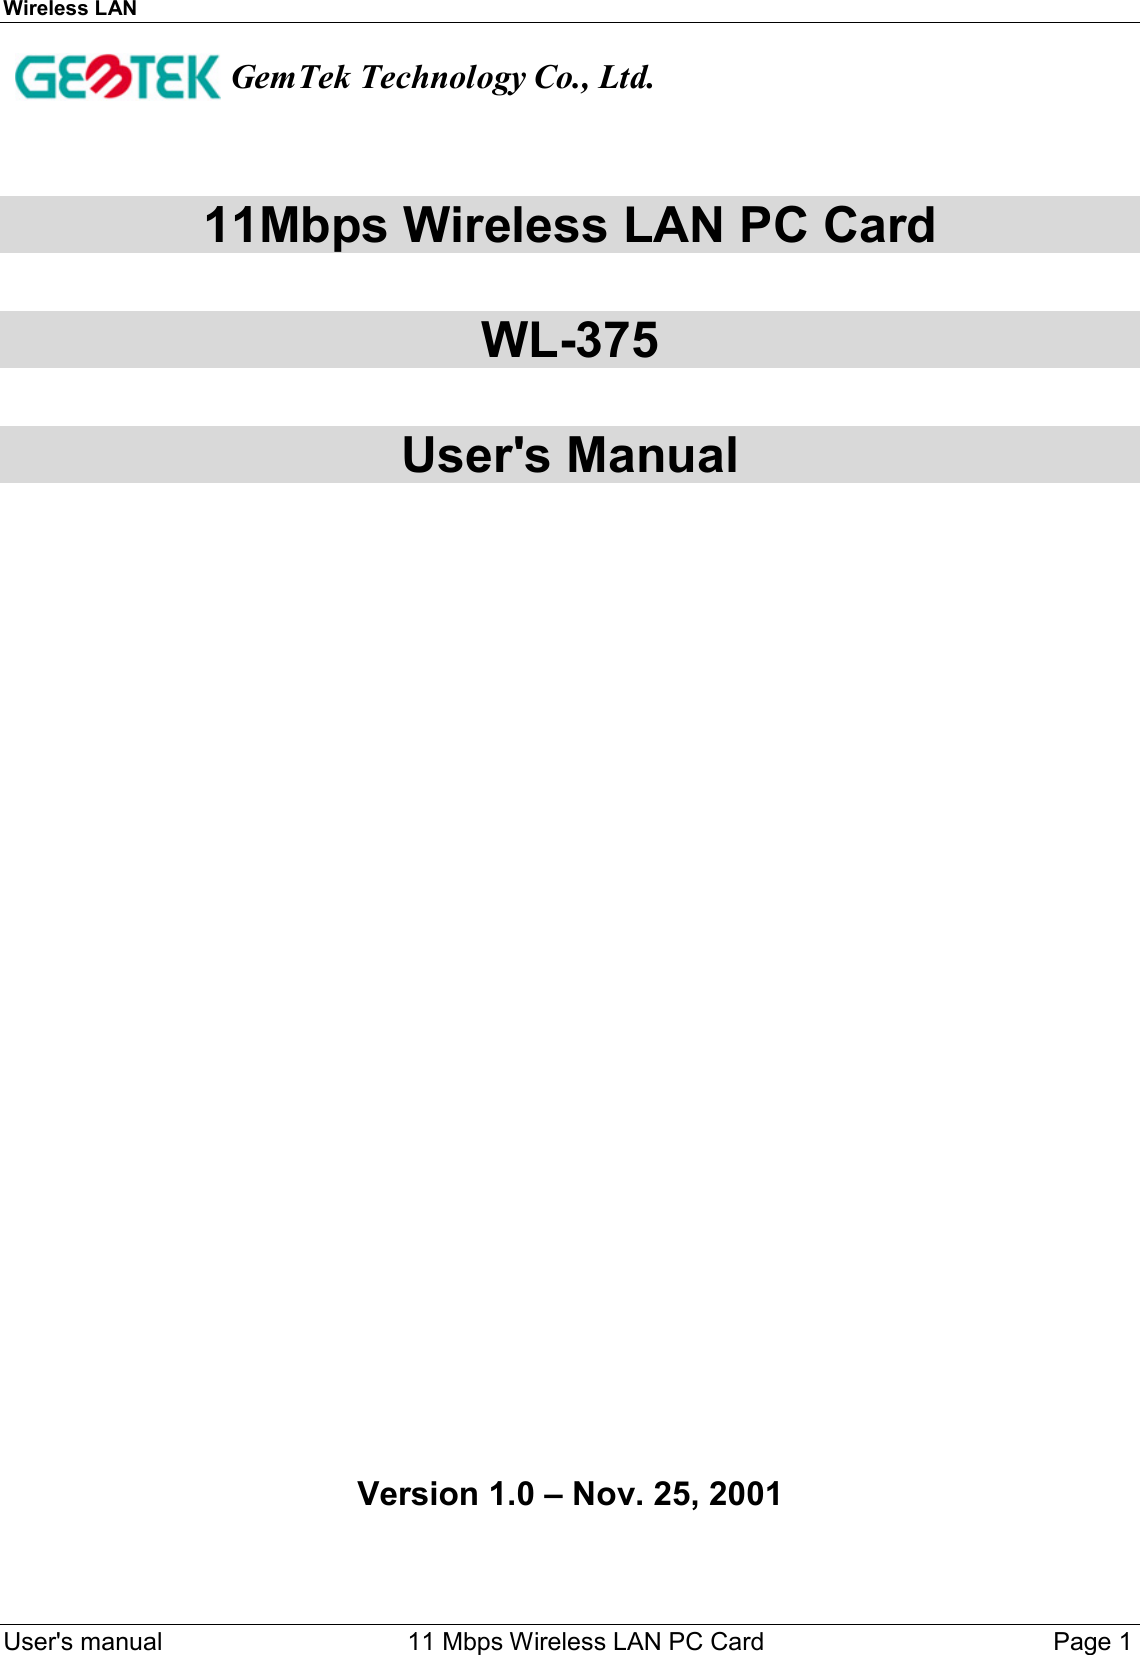 Wireless LAN     User&apos;s manual     11 Mbps Wireless LAN PC Card        Page 1       11Mbps Wireless LAN PC Card  WL-375  User&apos;s Manual                                    Version 1.0 – Nov. 25, 2001   GemTek Technology Co., Ltd.